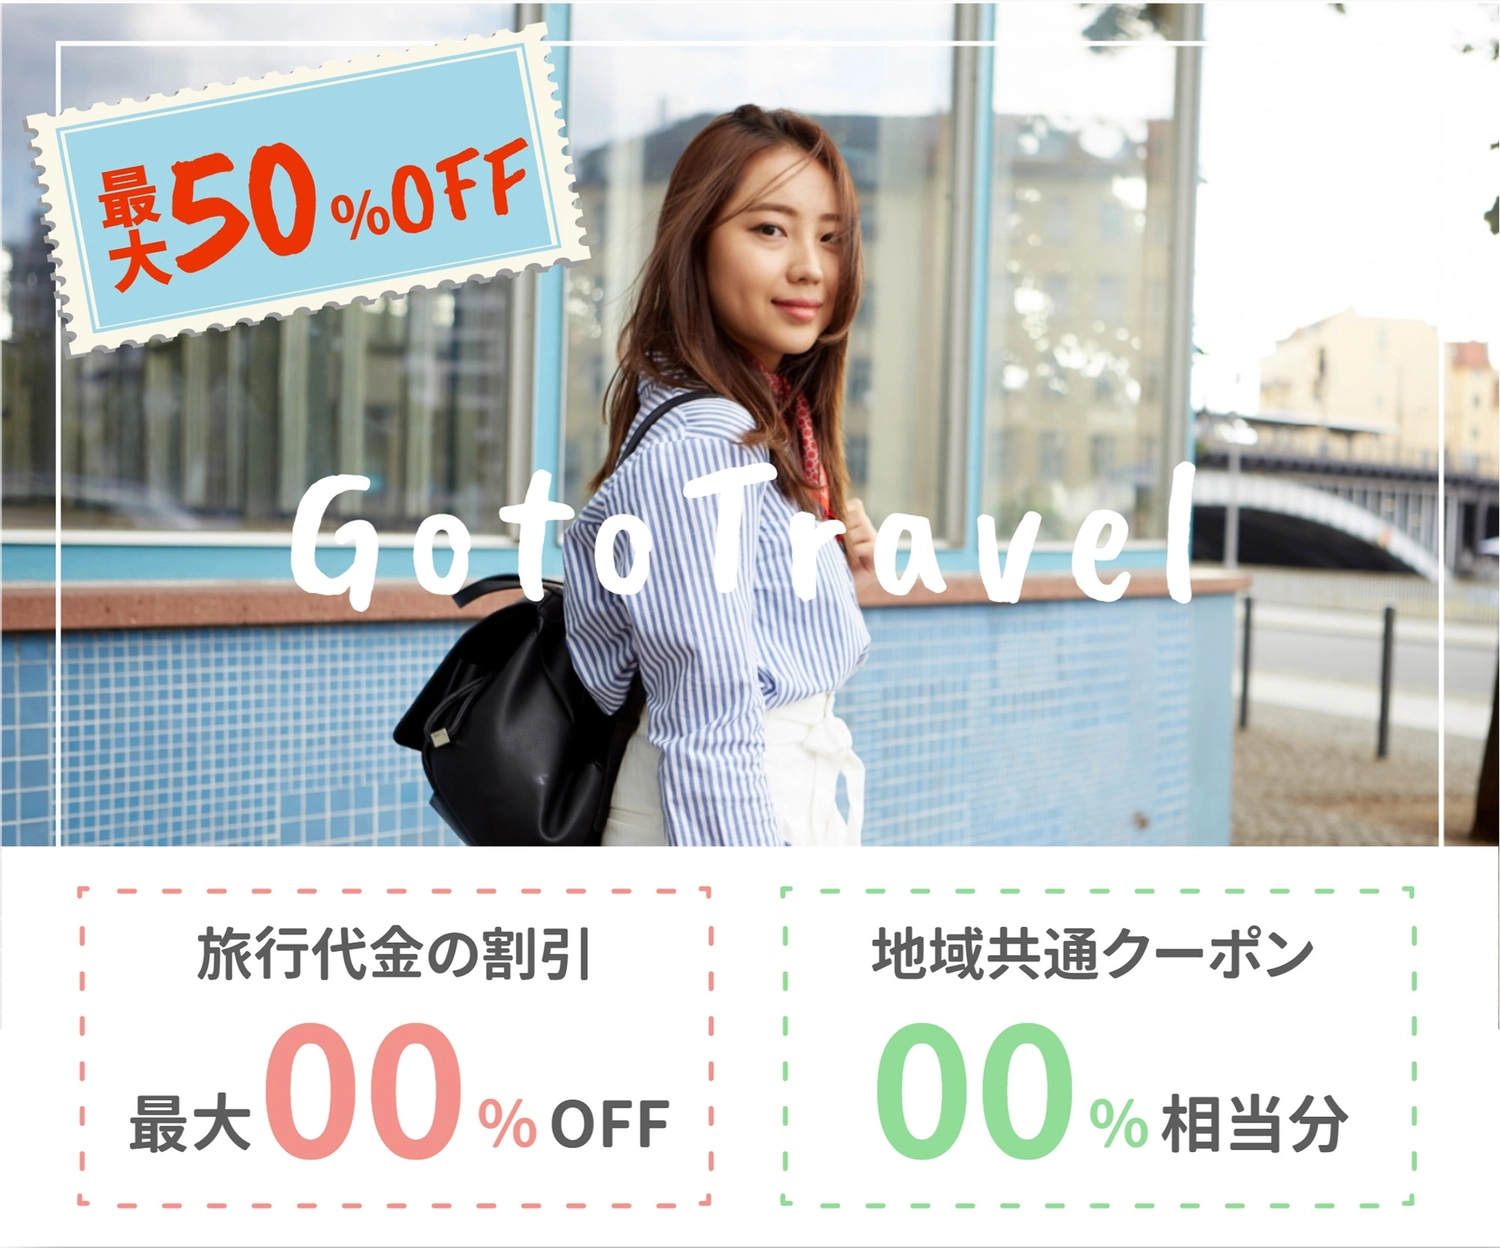 Gotoトラベルの広告バナー（写真）, Amount of money, discount, design, Banner template